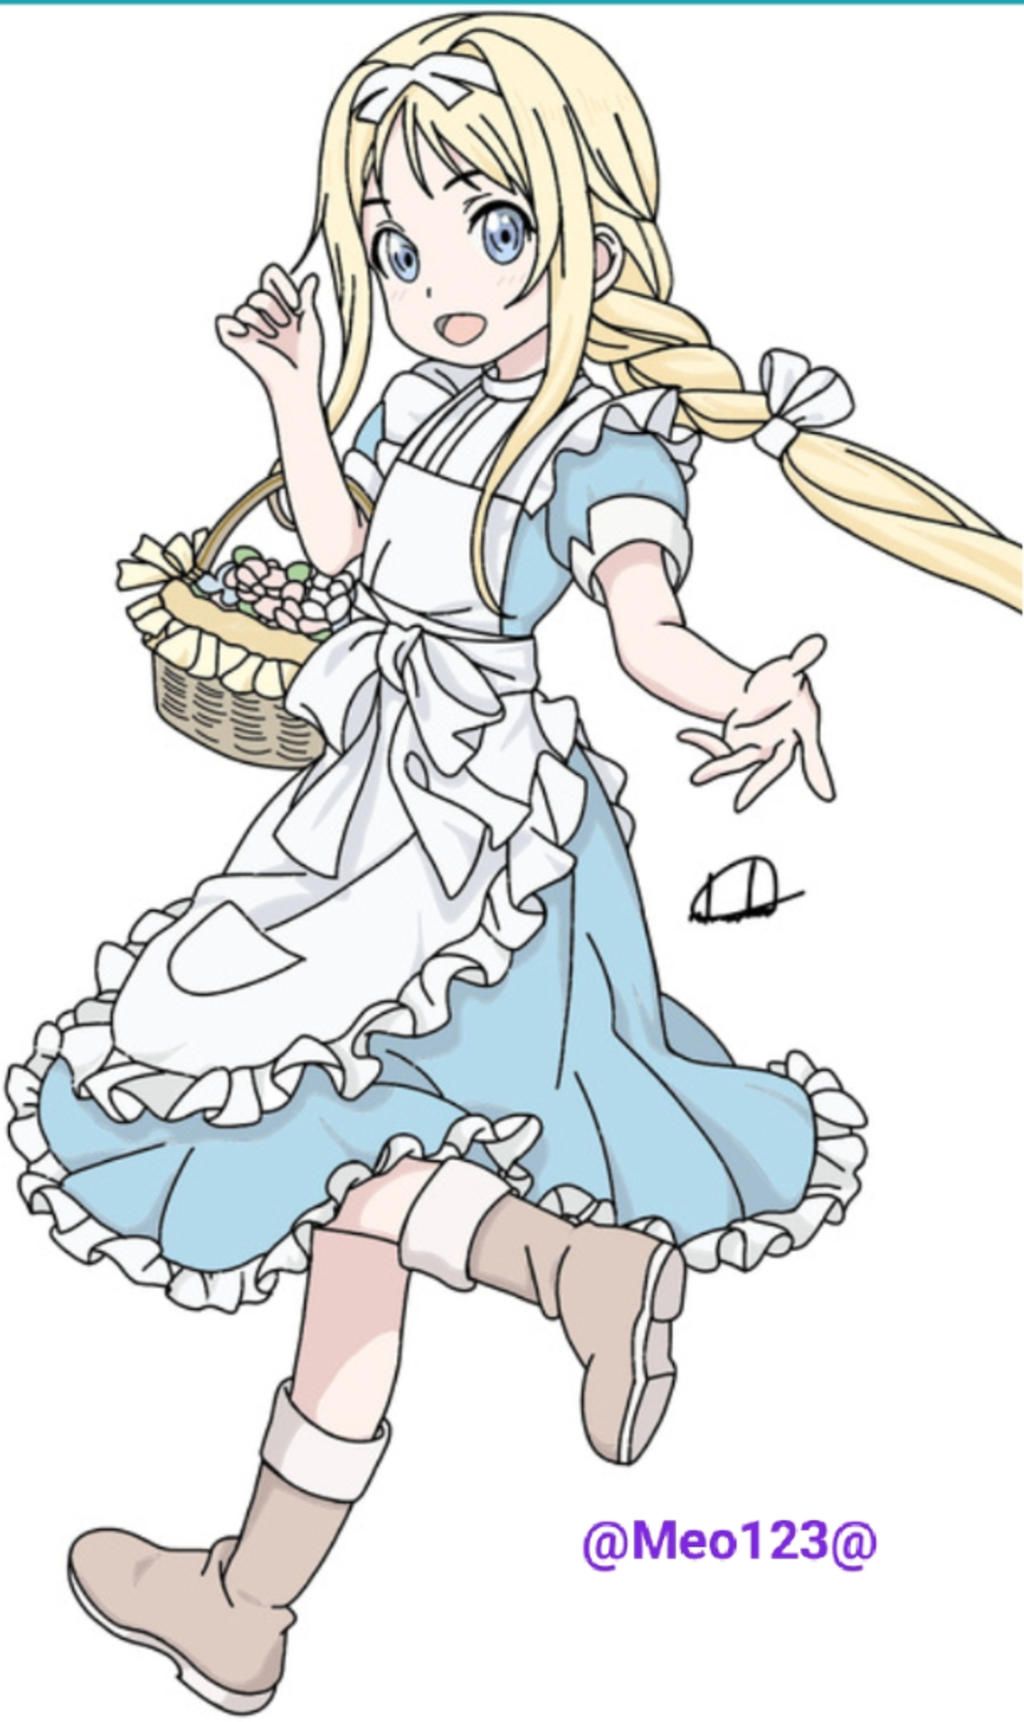 Alice anime version - Sweet angel by Daniewise on DeviantArt